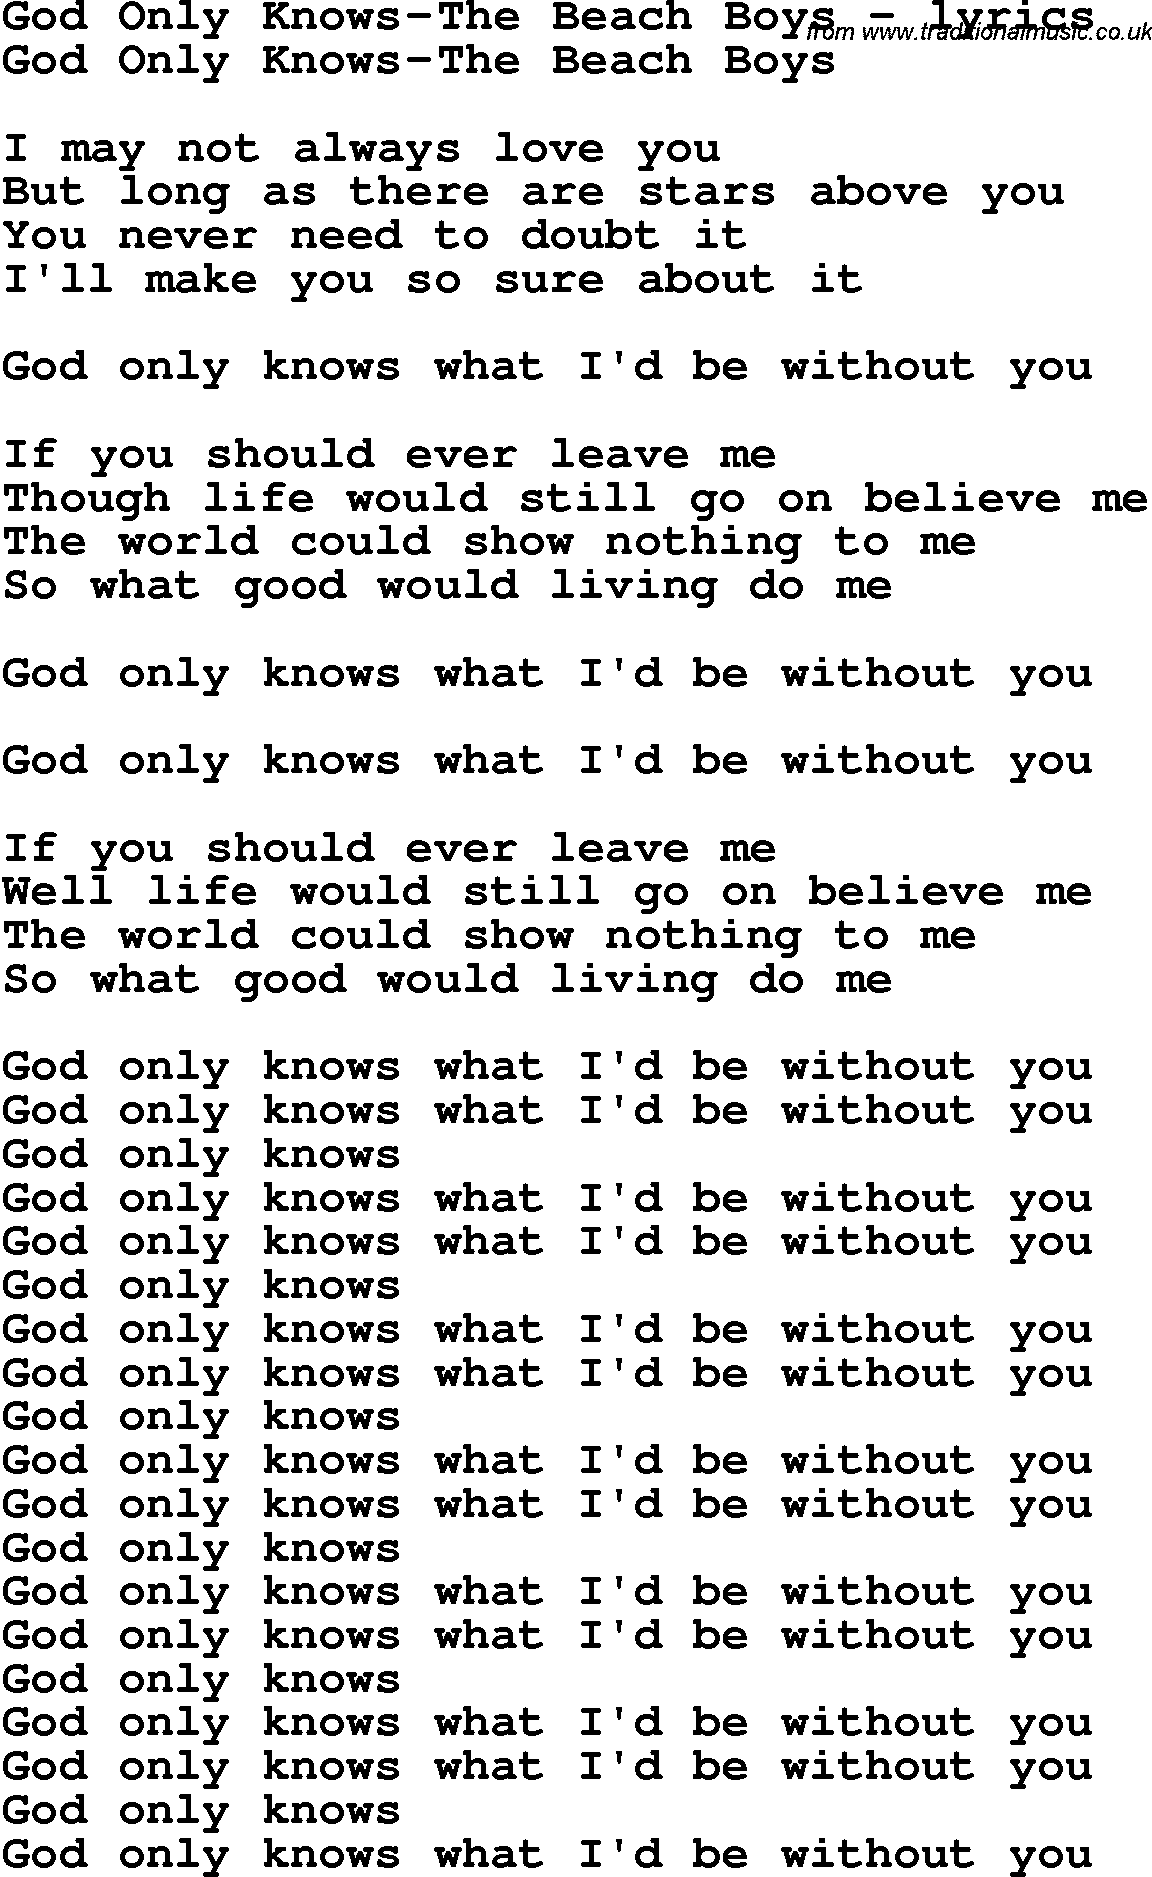 Love Song Lyrics for: God Only Knows-The Beach Boys